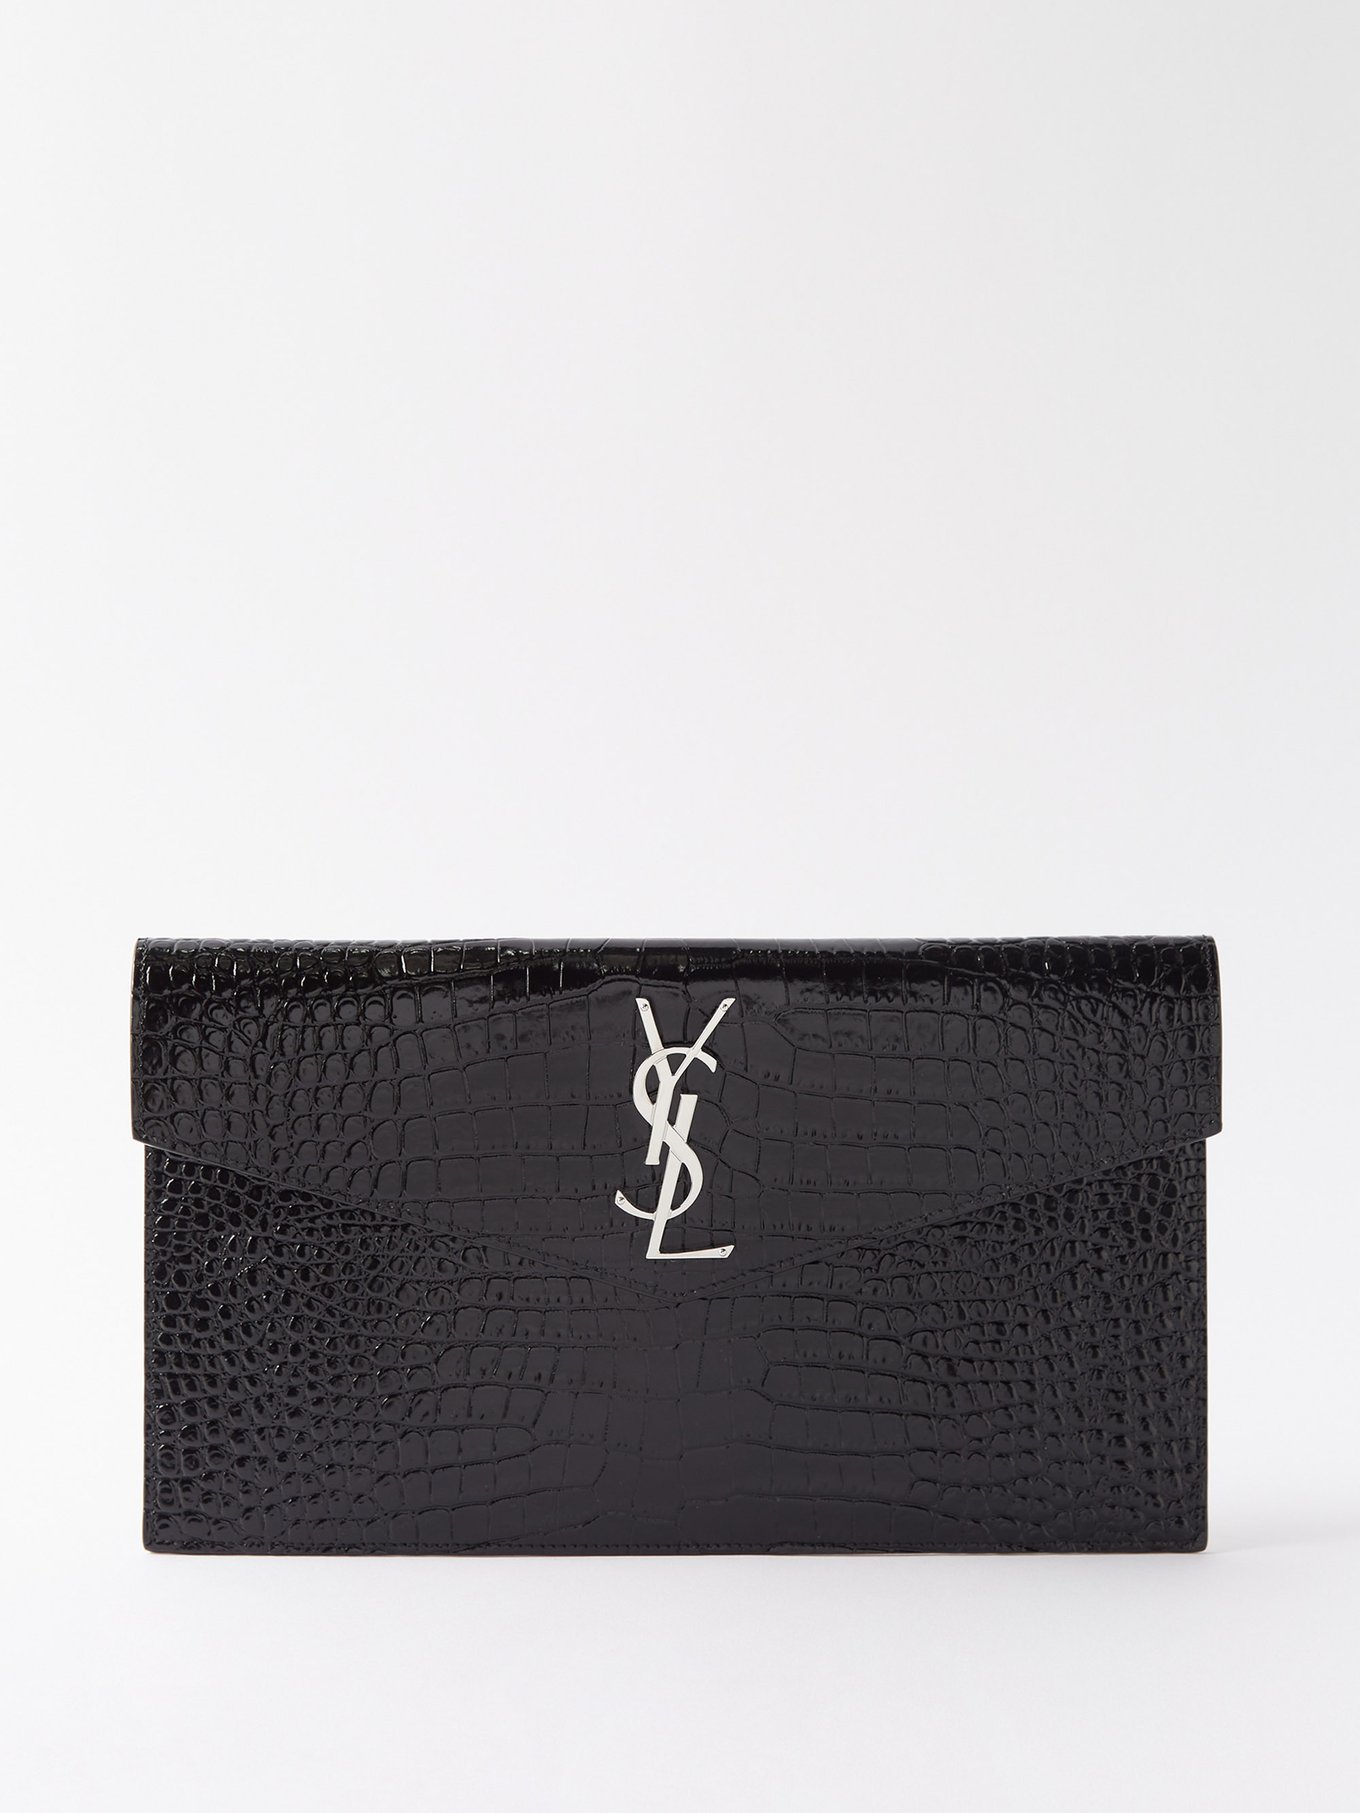 Saint Laurent Monogram Key Pouch In Crocodile Embossed Leather in